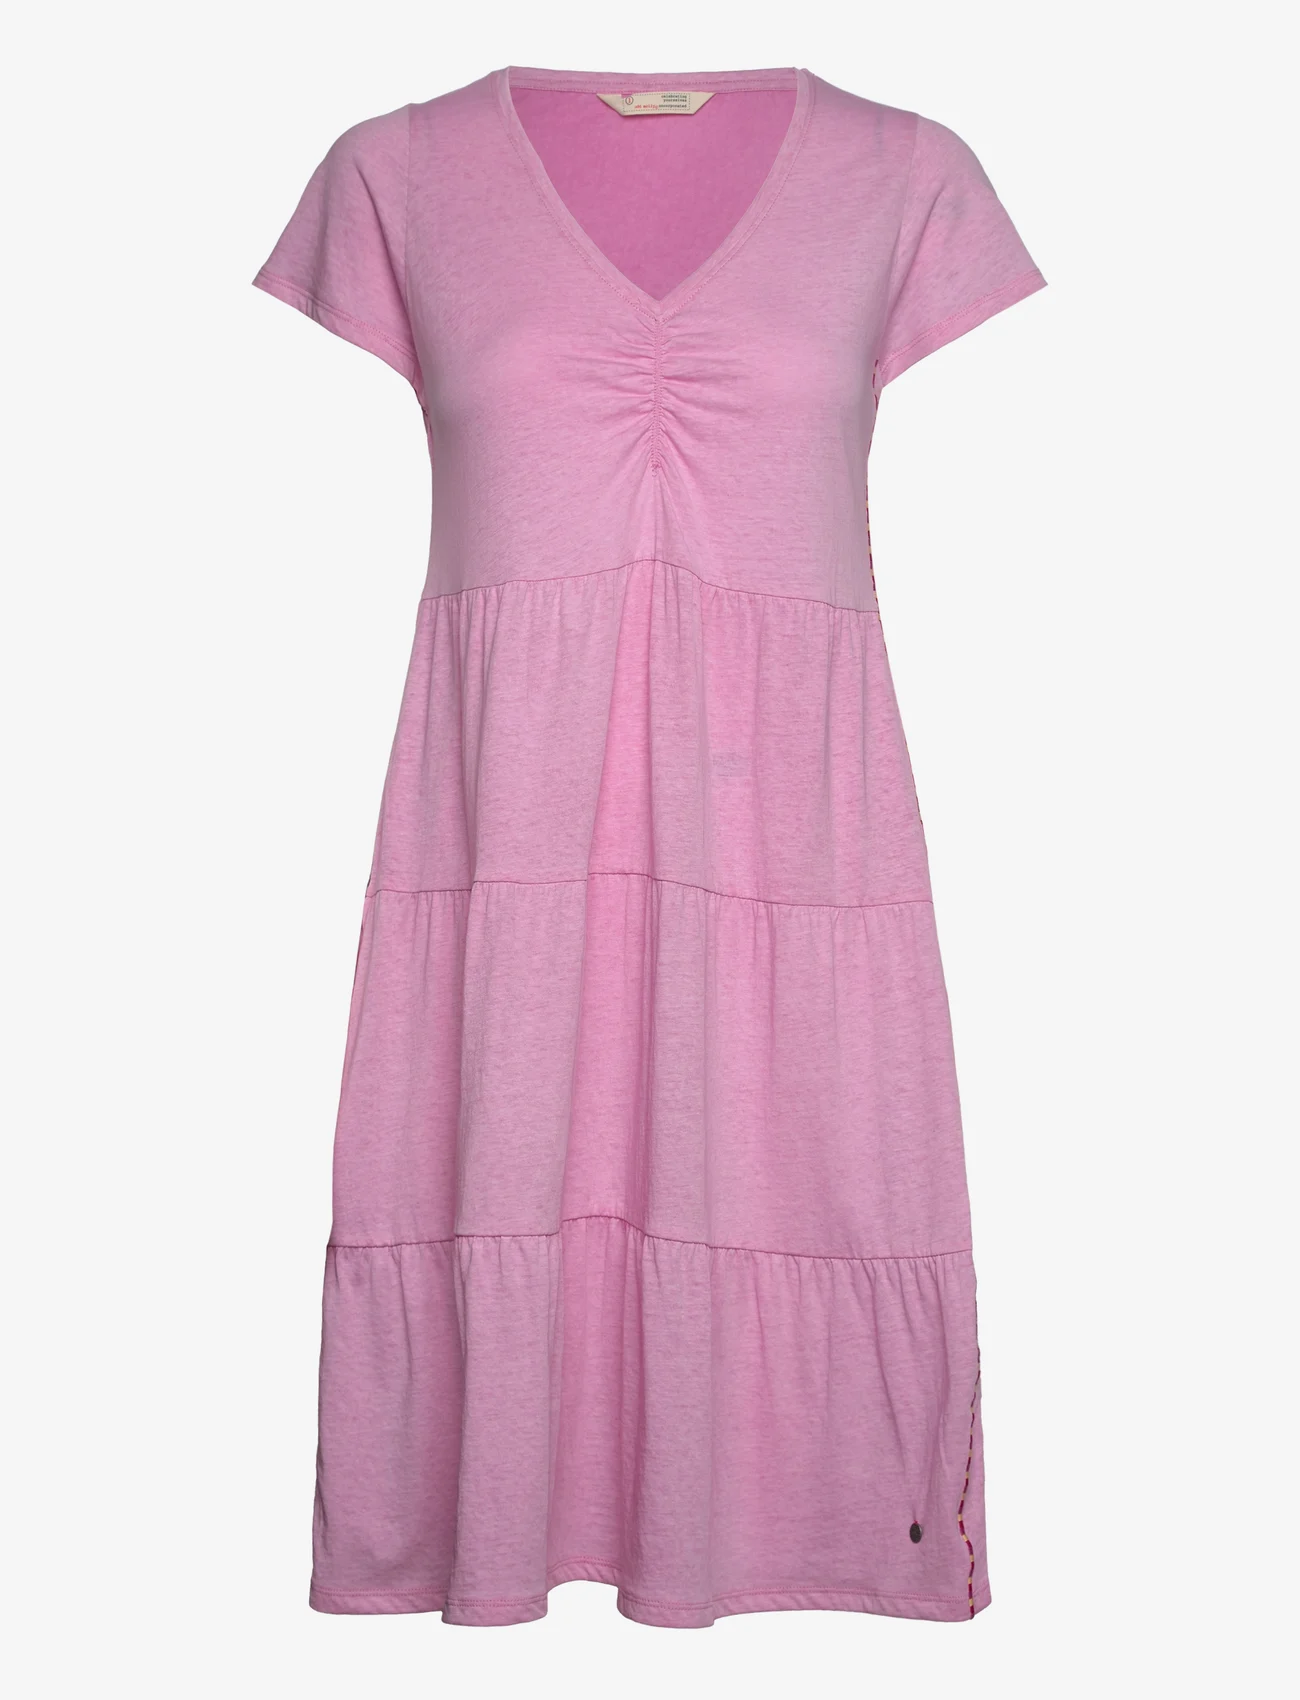 ODD MOLLY - Freya Dress - sommerkjoler - meadow pink - 0